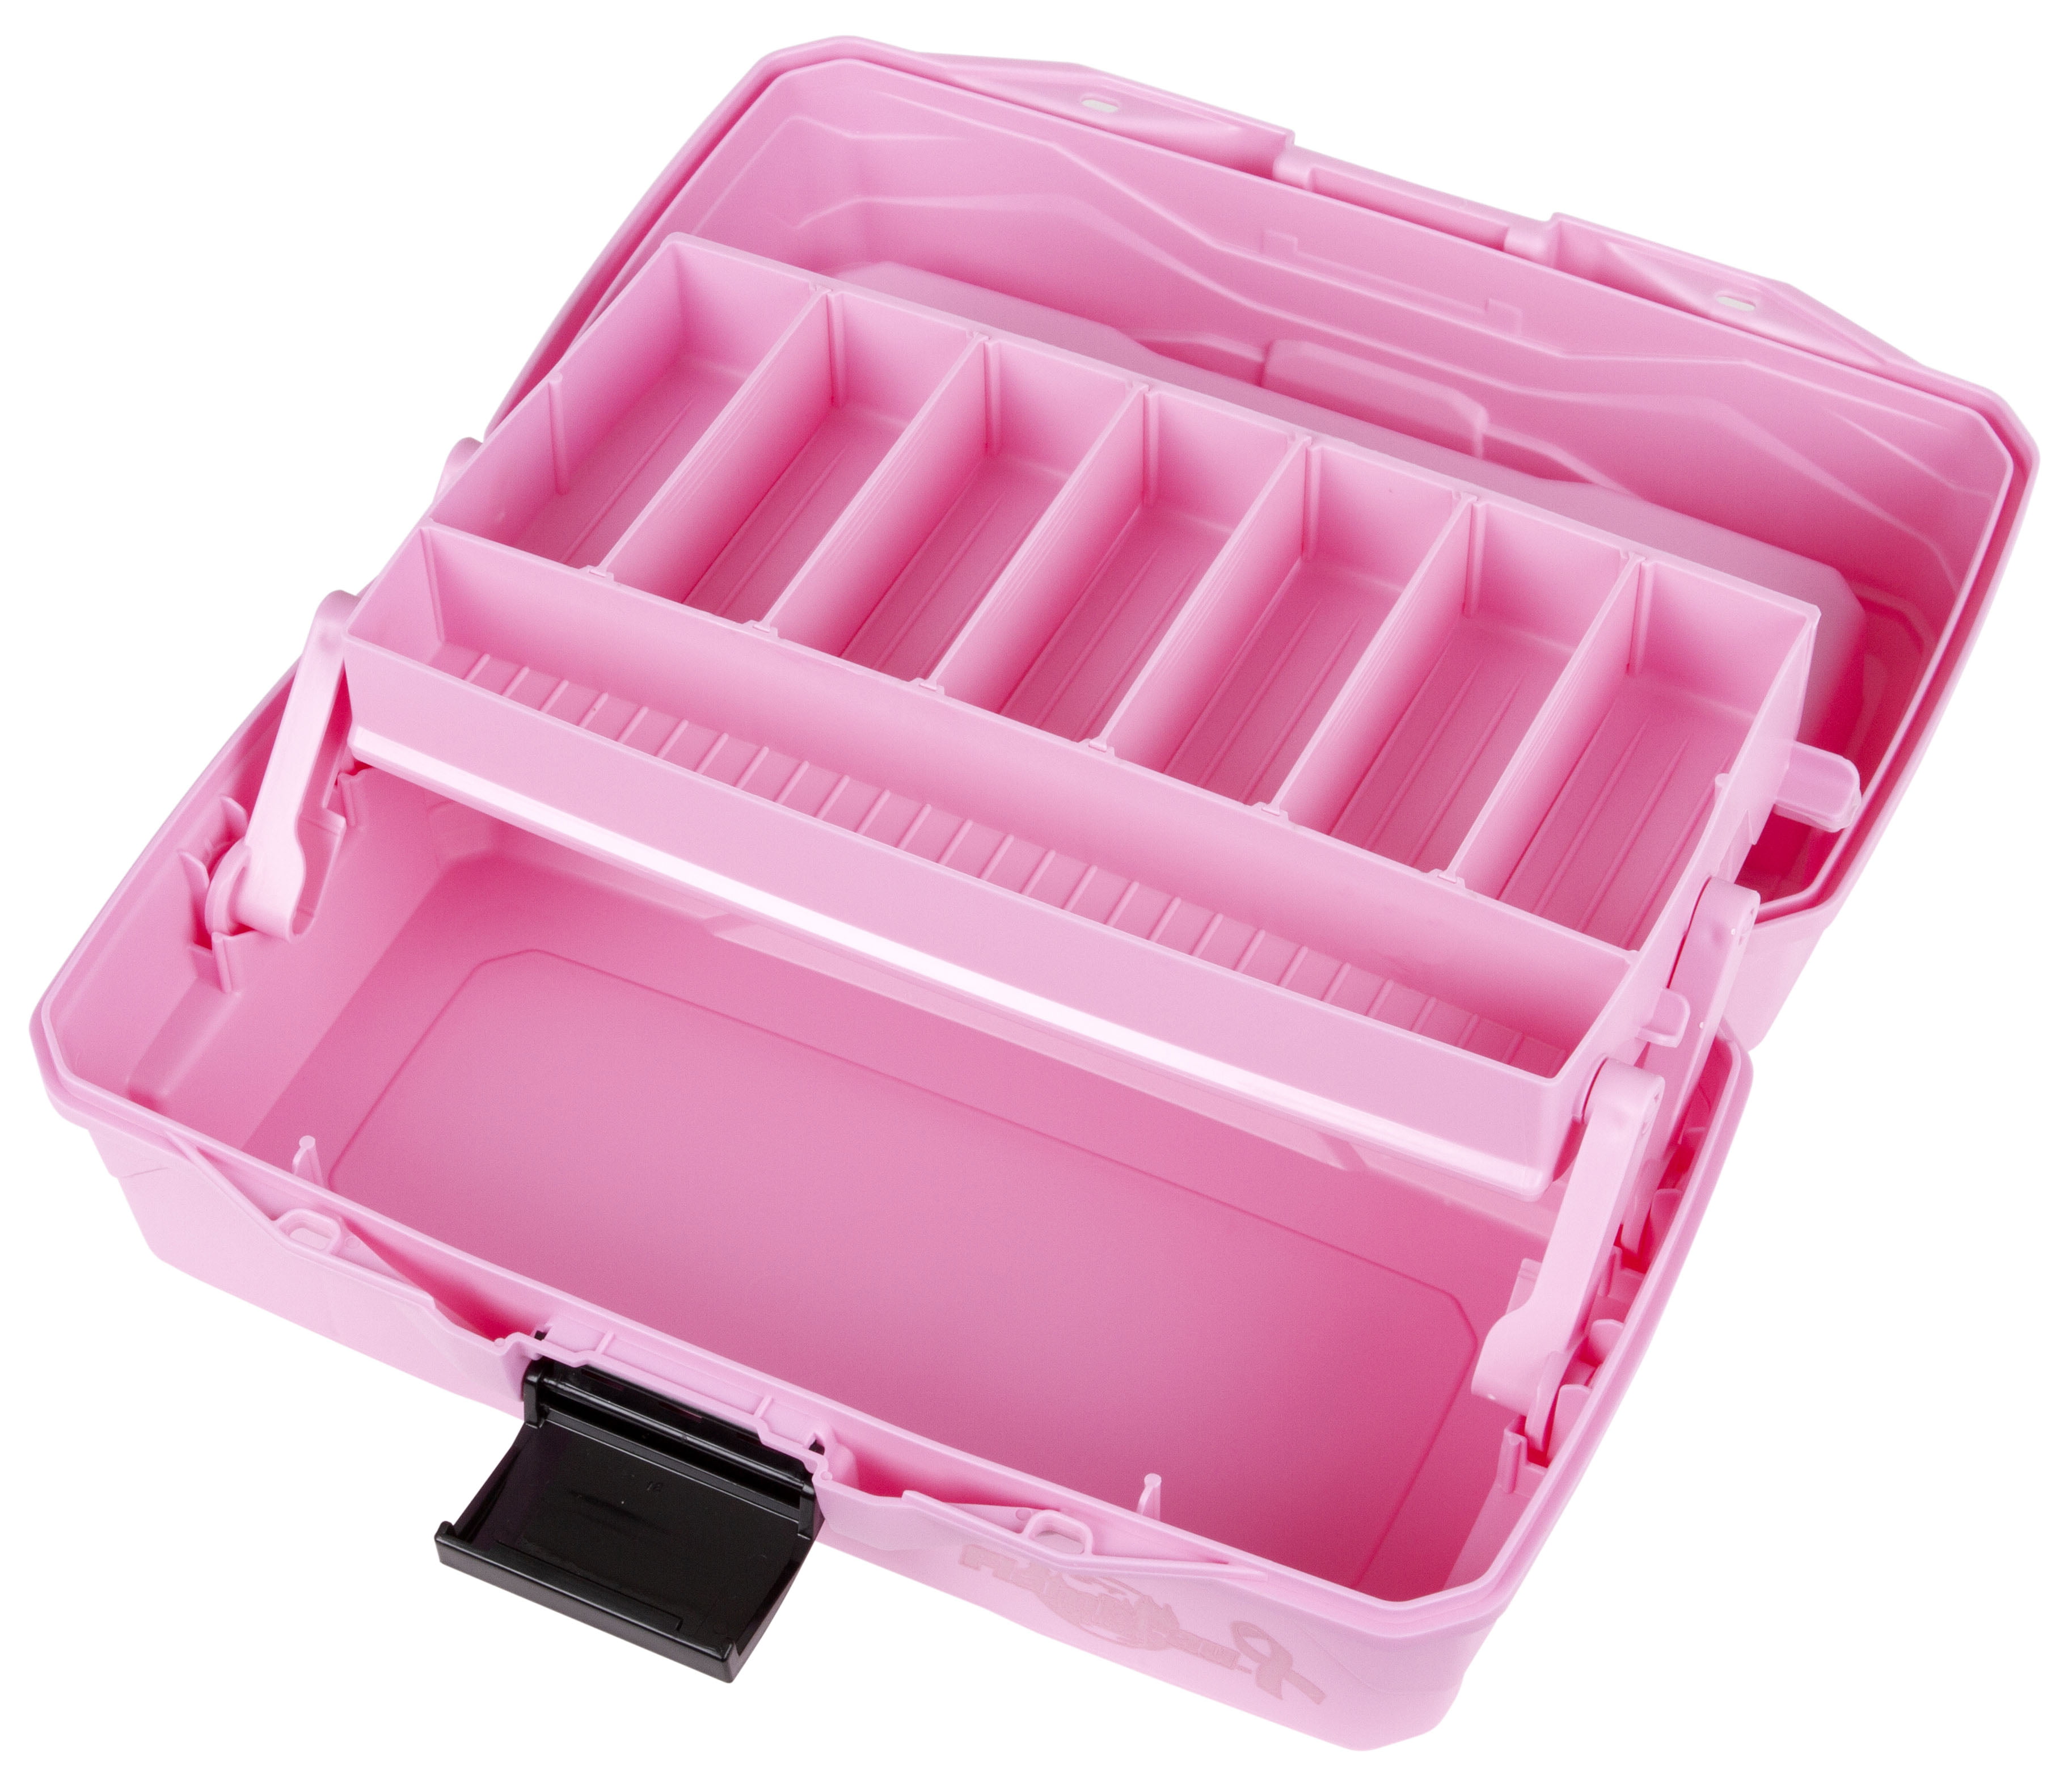 The Pink Tackle Box